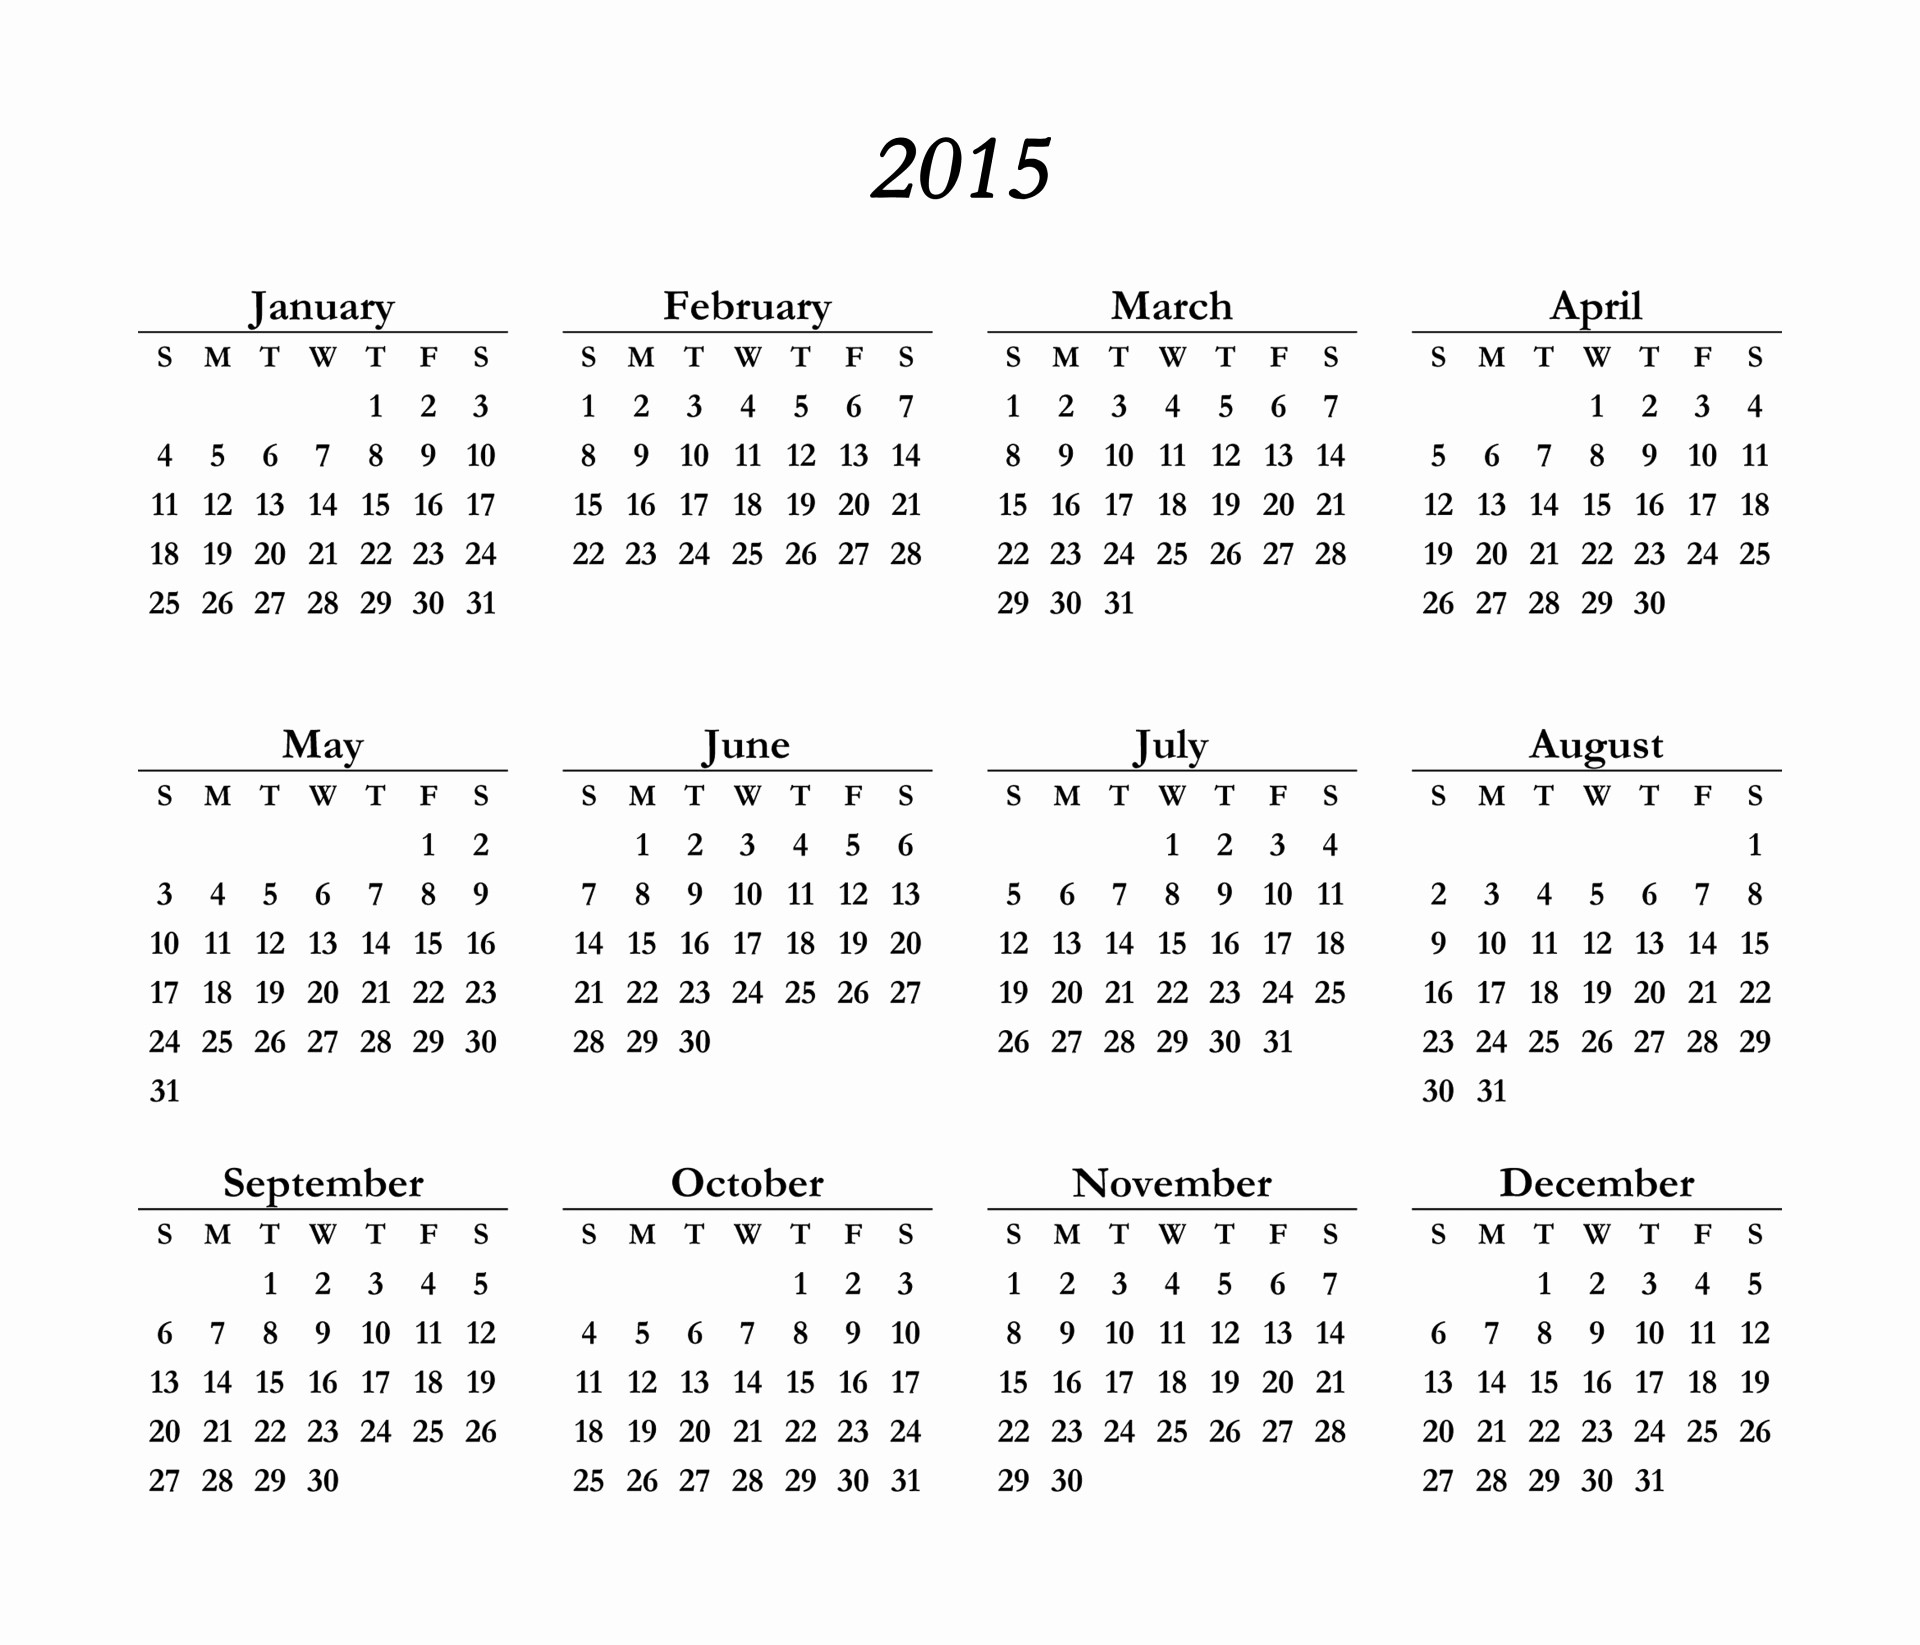 Free Yearly Calendar Templates 2015 Awesome Safasdasdas 2015 Calendar